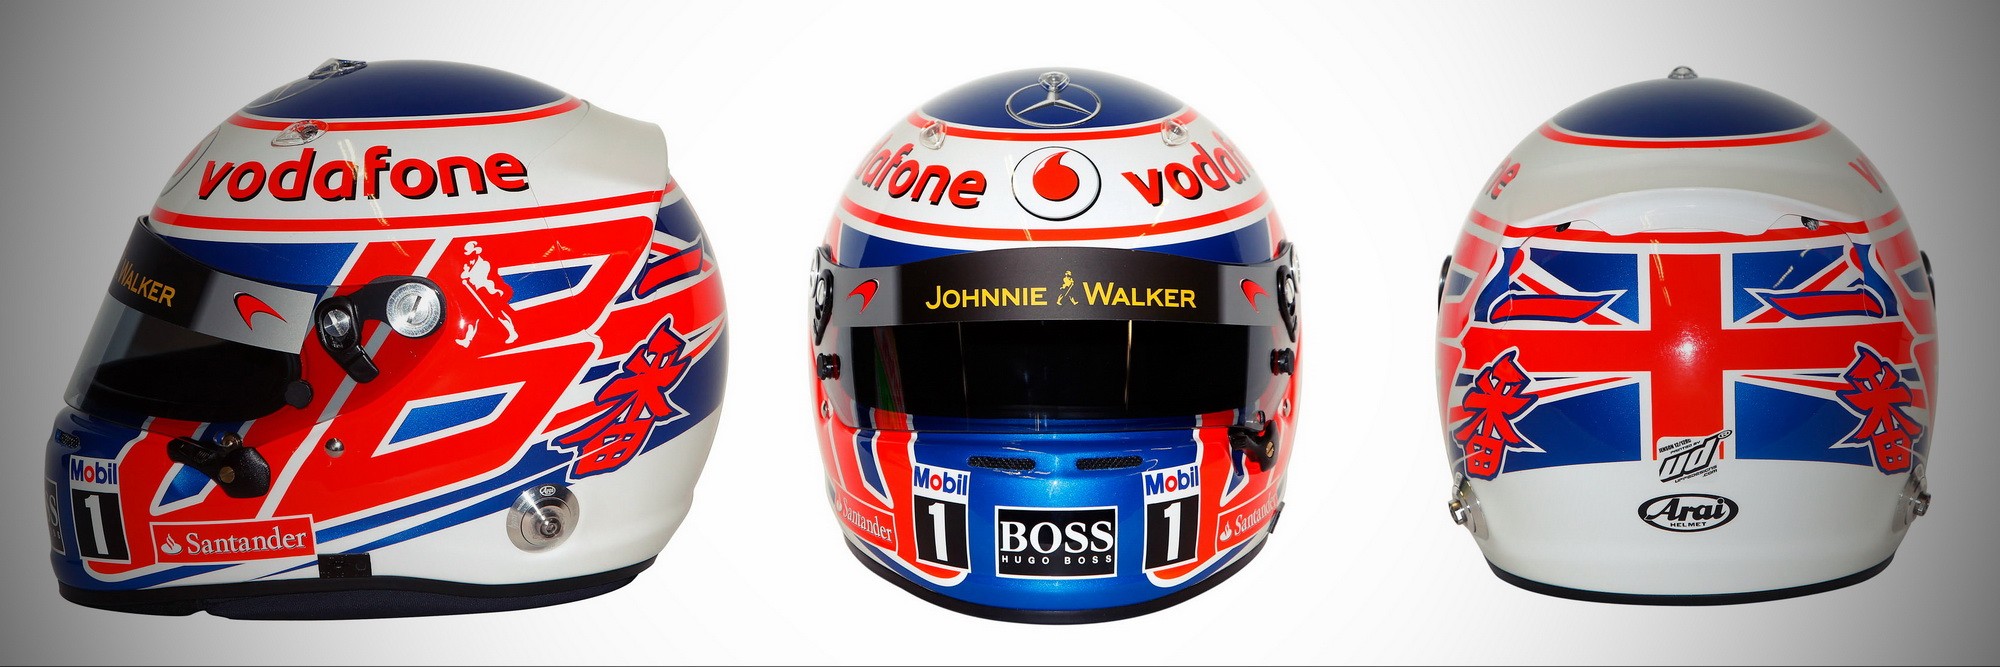 Шлем Дженсона Баттона на сезон 2013 года | 2013 helmet of Jenson Button